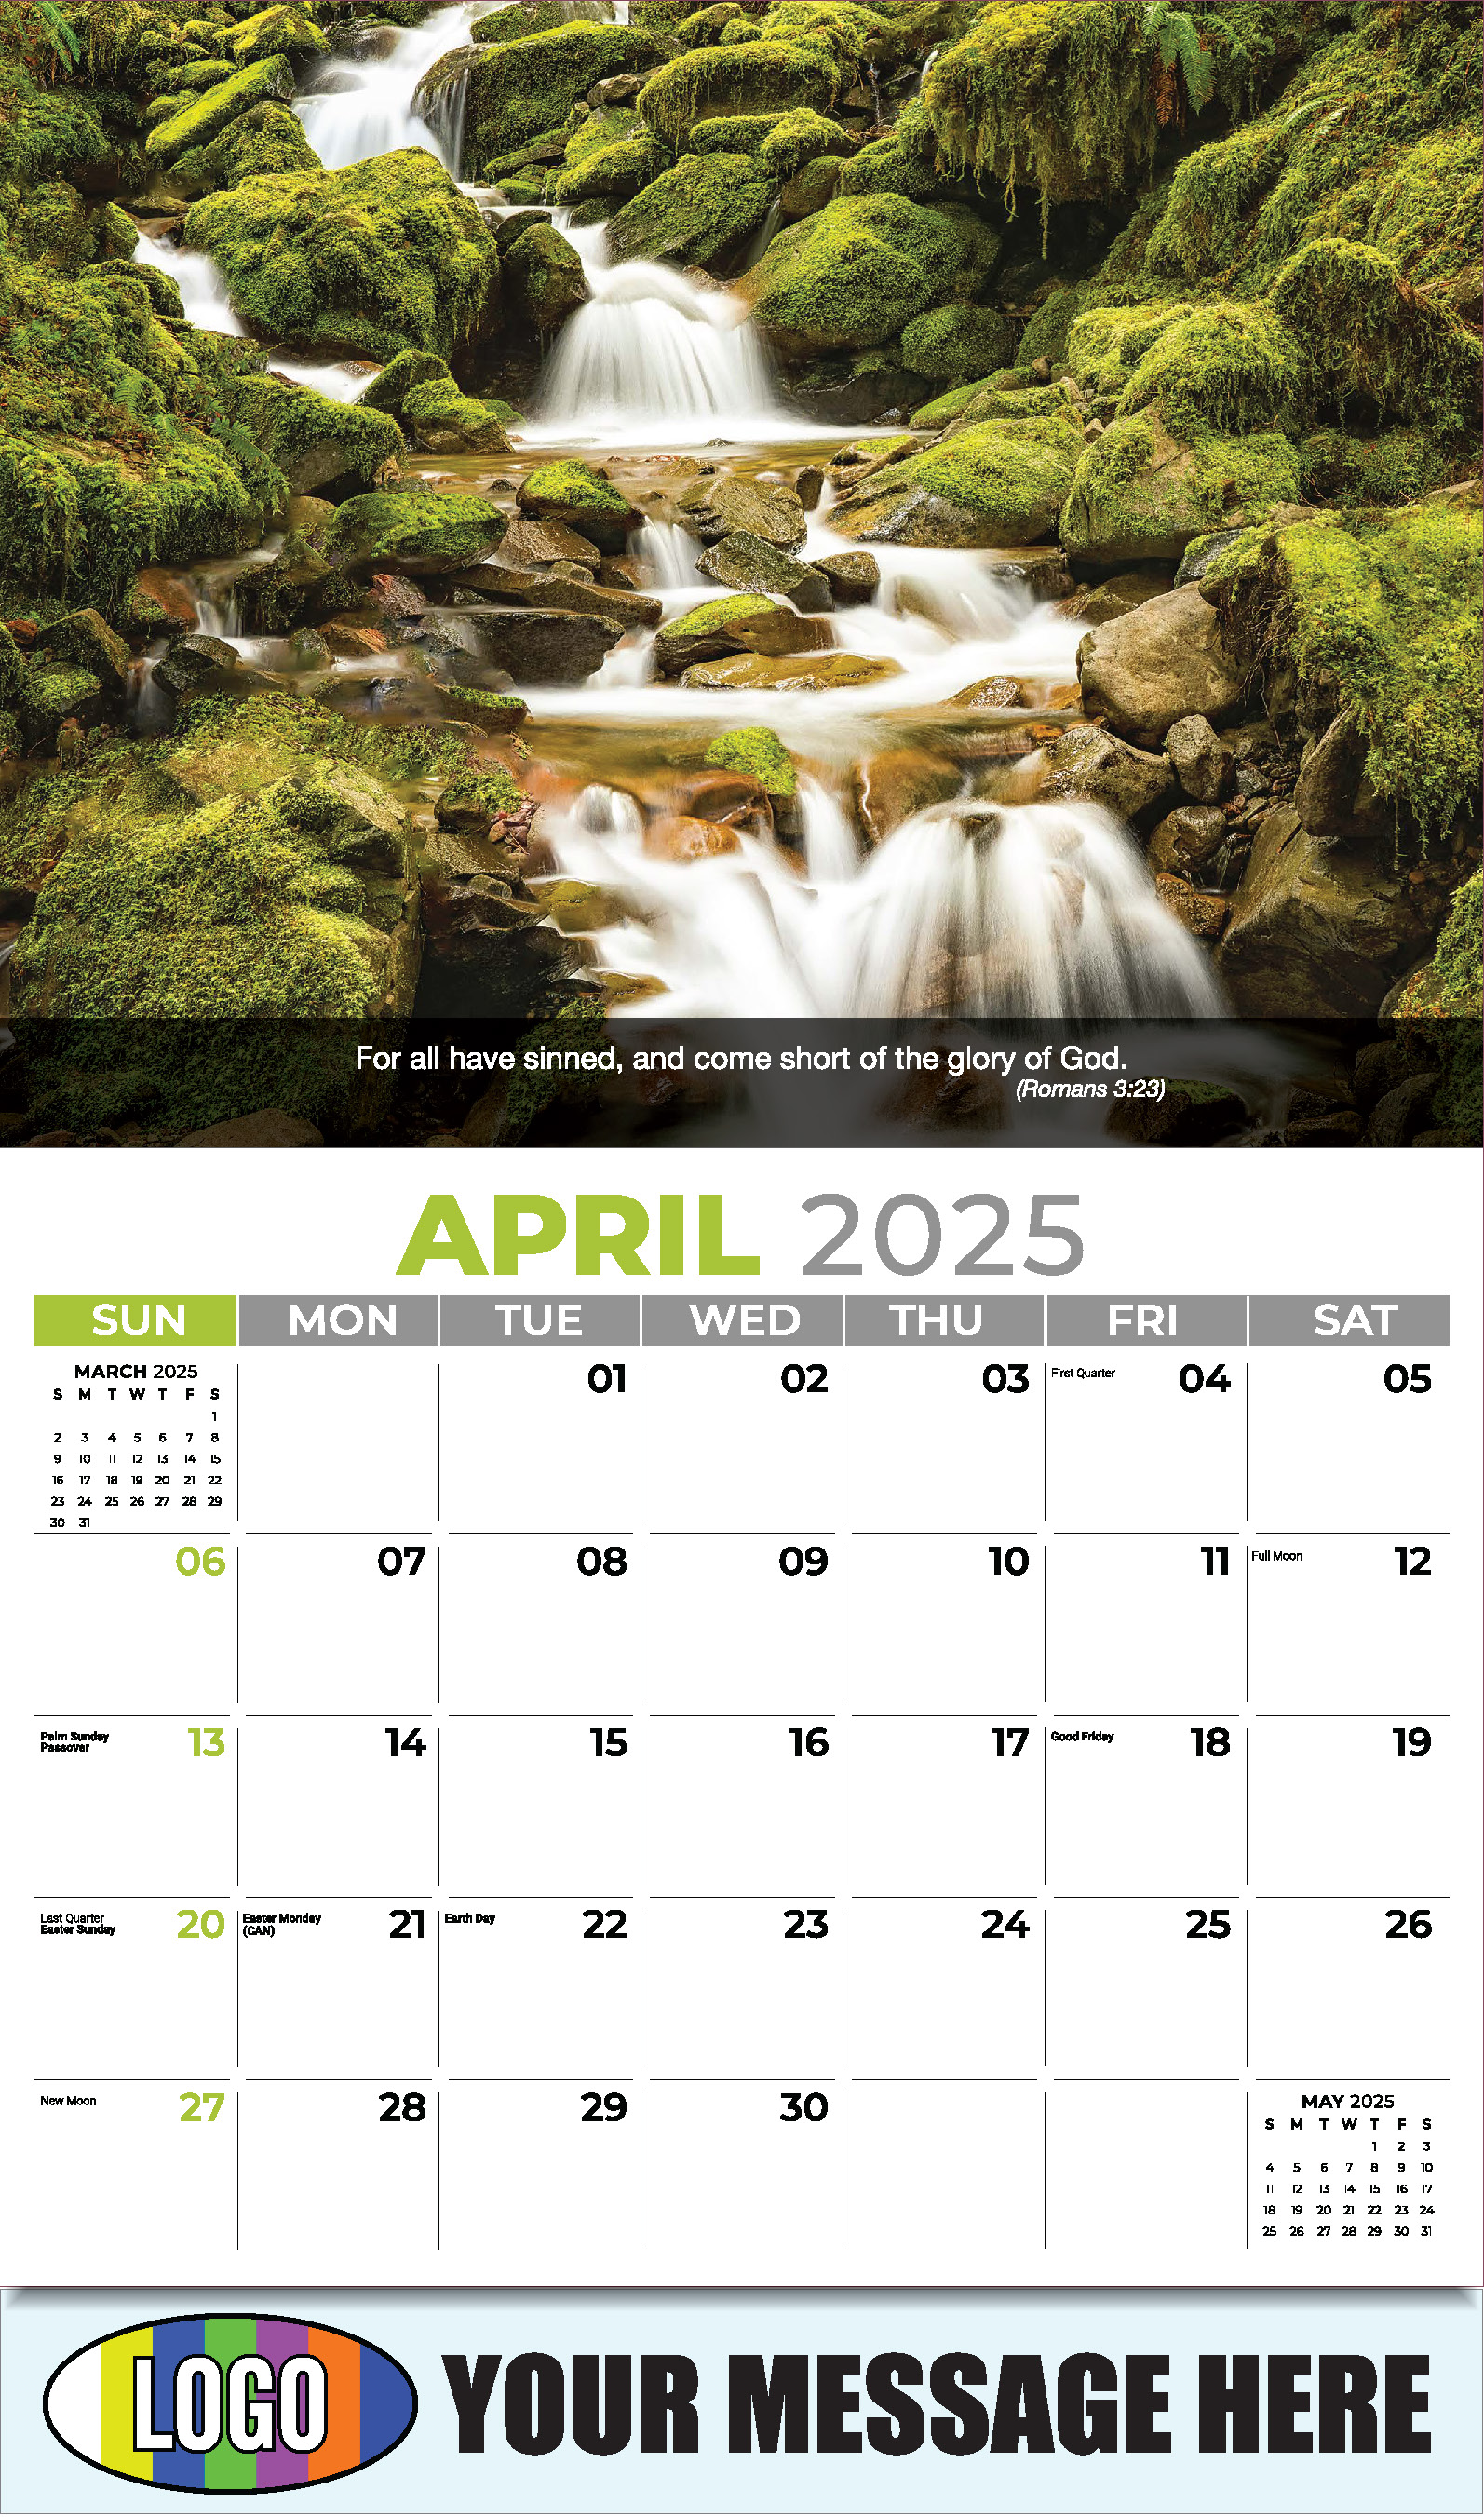 Faith Passages 2025 Christian Business Advertising Calendar - April